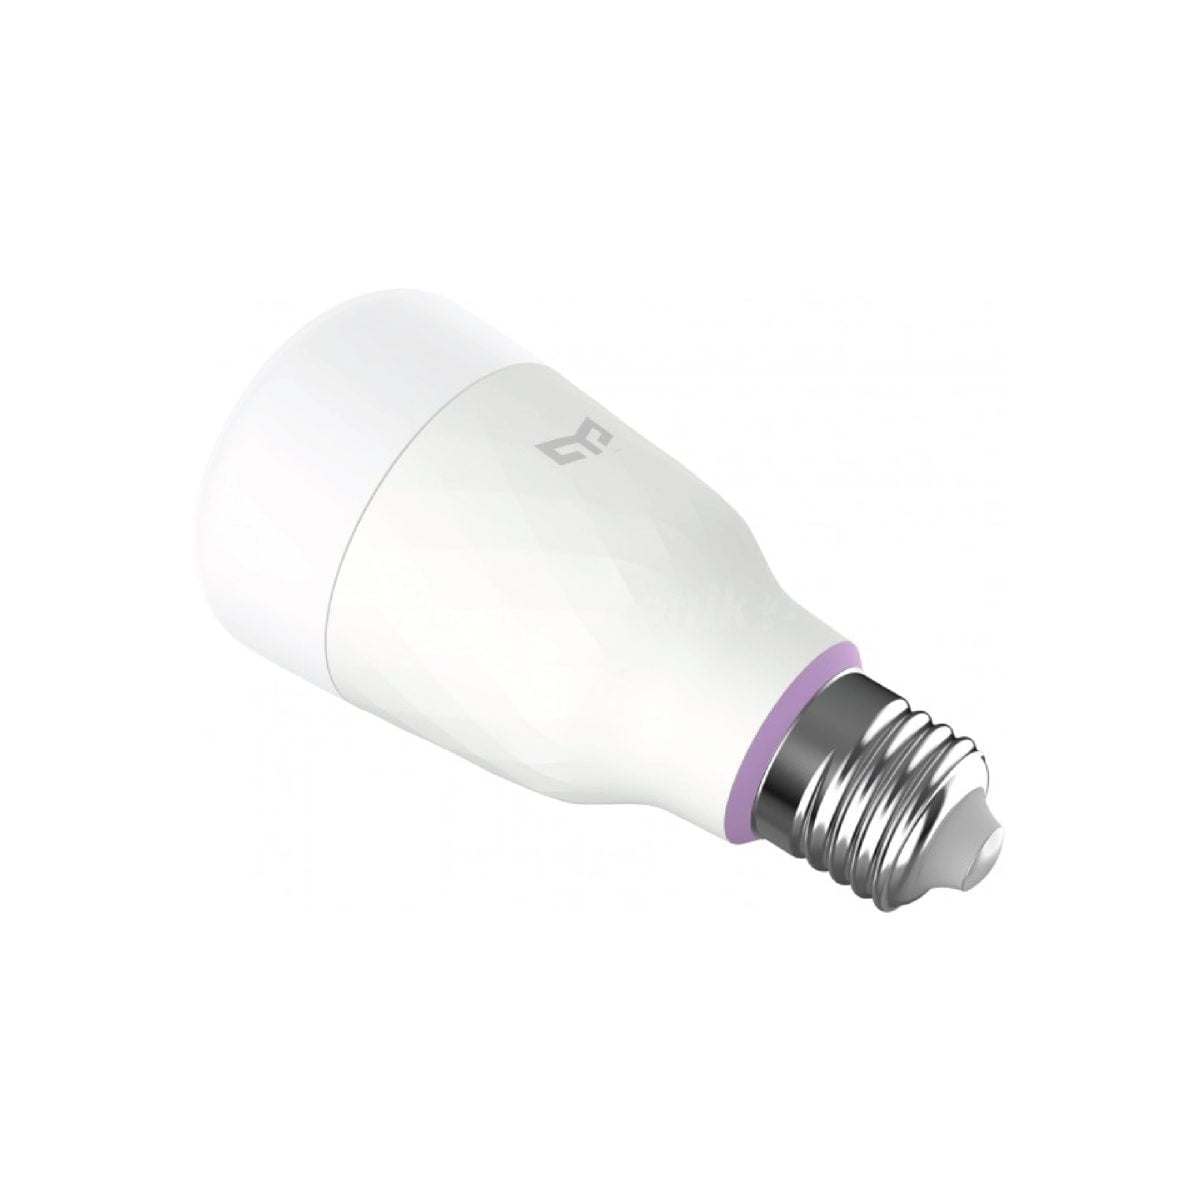 Bulb 25 شاومي سوف تسمح لك لمبة الإضاءة الذكية Yeelight 1S Rgb بإنشاء منزلك الذكي الخاص. يمكنك التحكم فيه بصوتك أو تطبيقك وتحديد درجة الحرارة والقوة التي يجب أن يلمع بها. التدفق الضوئي: 800 لومن درجة حرارة اللون: 1700 K-6500K حامل المصباح: E27 الطاقة المقدرة: 8.5 واط &Nbsp; 16 مليون لون مع تمكين Wifi والتحكم الصوتي والتحكم في التطبيقات ومزامنة الموسيقى &Lt;Img Class=&Quot;Alignnone Wp-Image-8061 Size-Full&Quot; Src=&Quot;Https://Lablaab.com/Wp-Content/Uploads/2020/04/Bulb-27-2-Scaled.jpg&Quot; Alt=&Quot;&Quot; Width=&Quot;2560&Quot; Height=&Quot;357&Quot;&Gt; &Nbsp; لمبة يلايت الذكية 1S (ألوان)